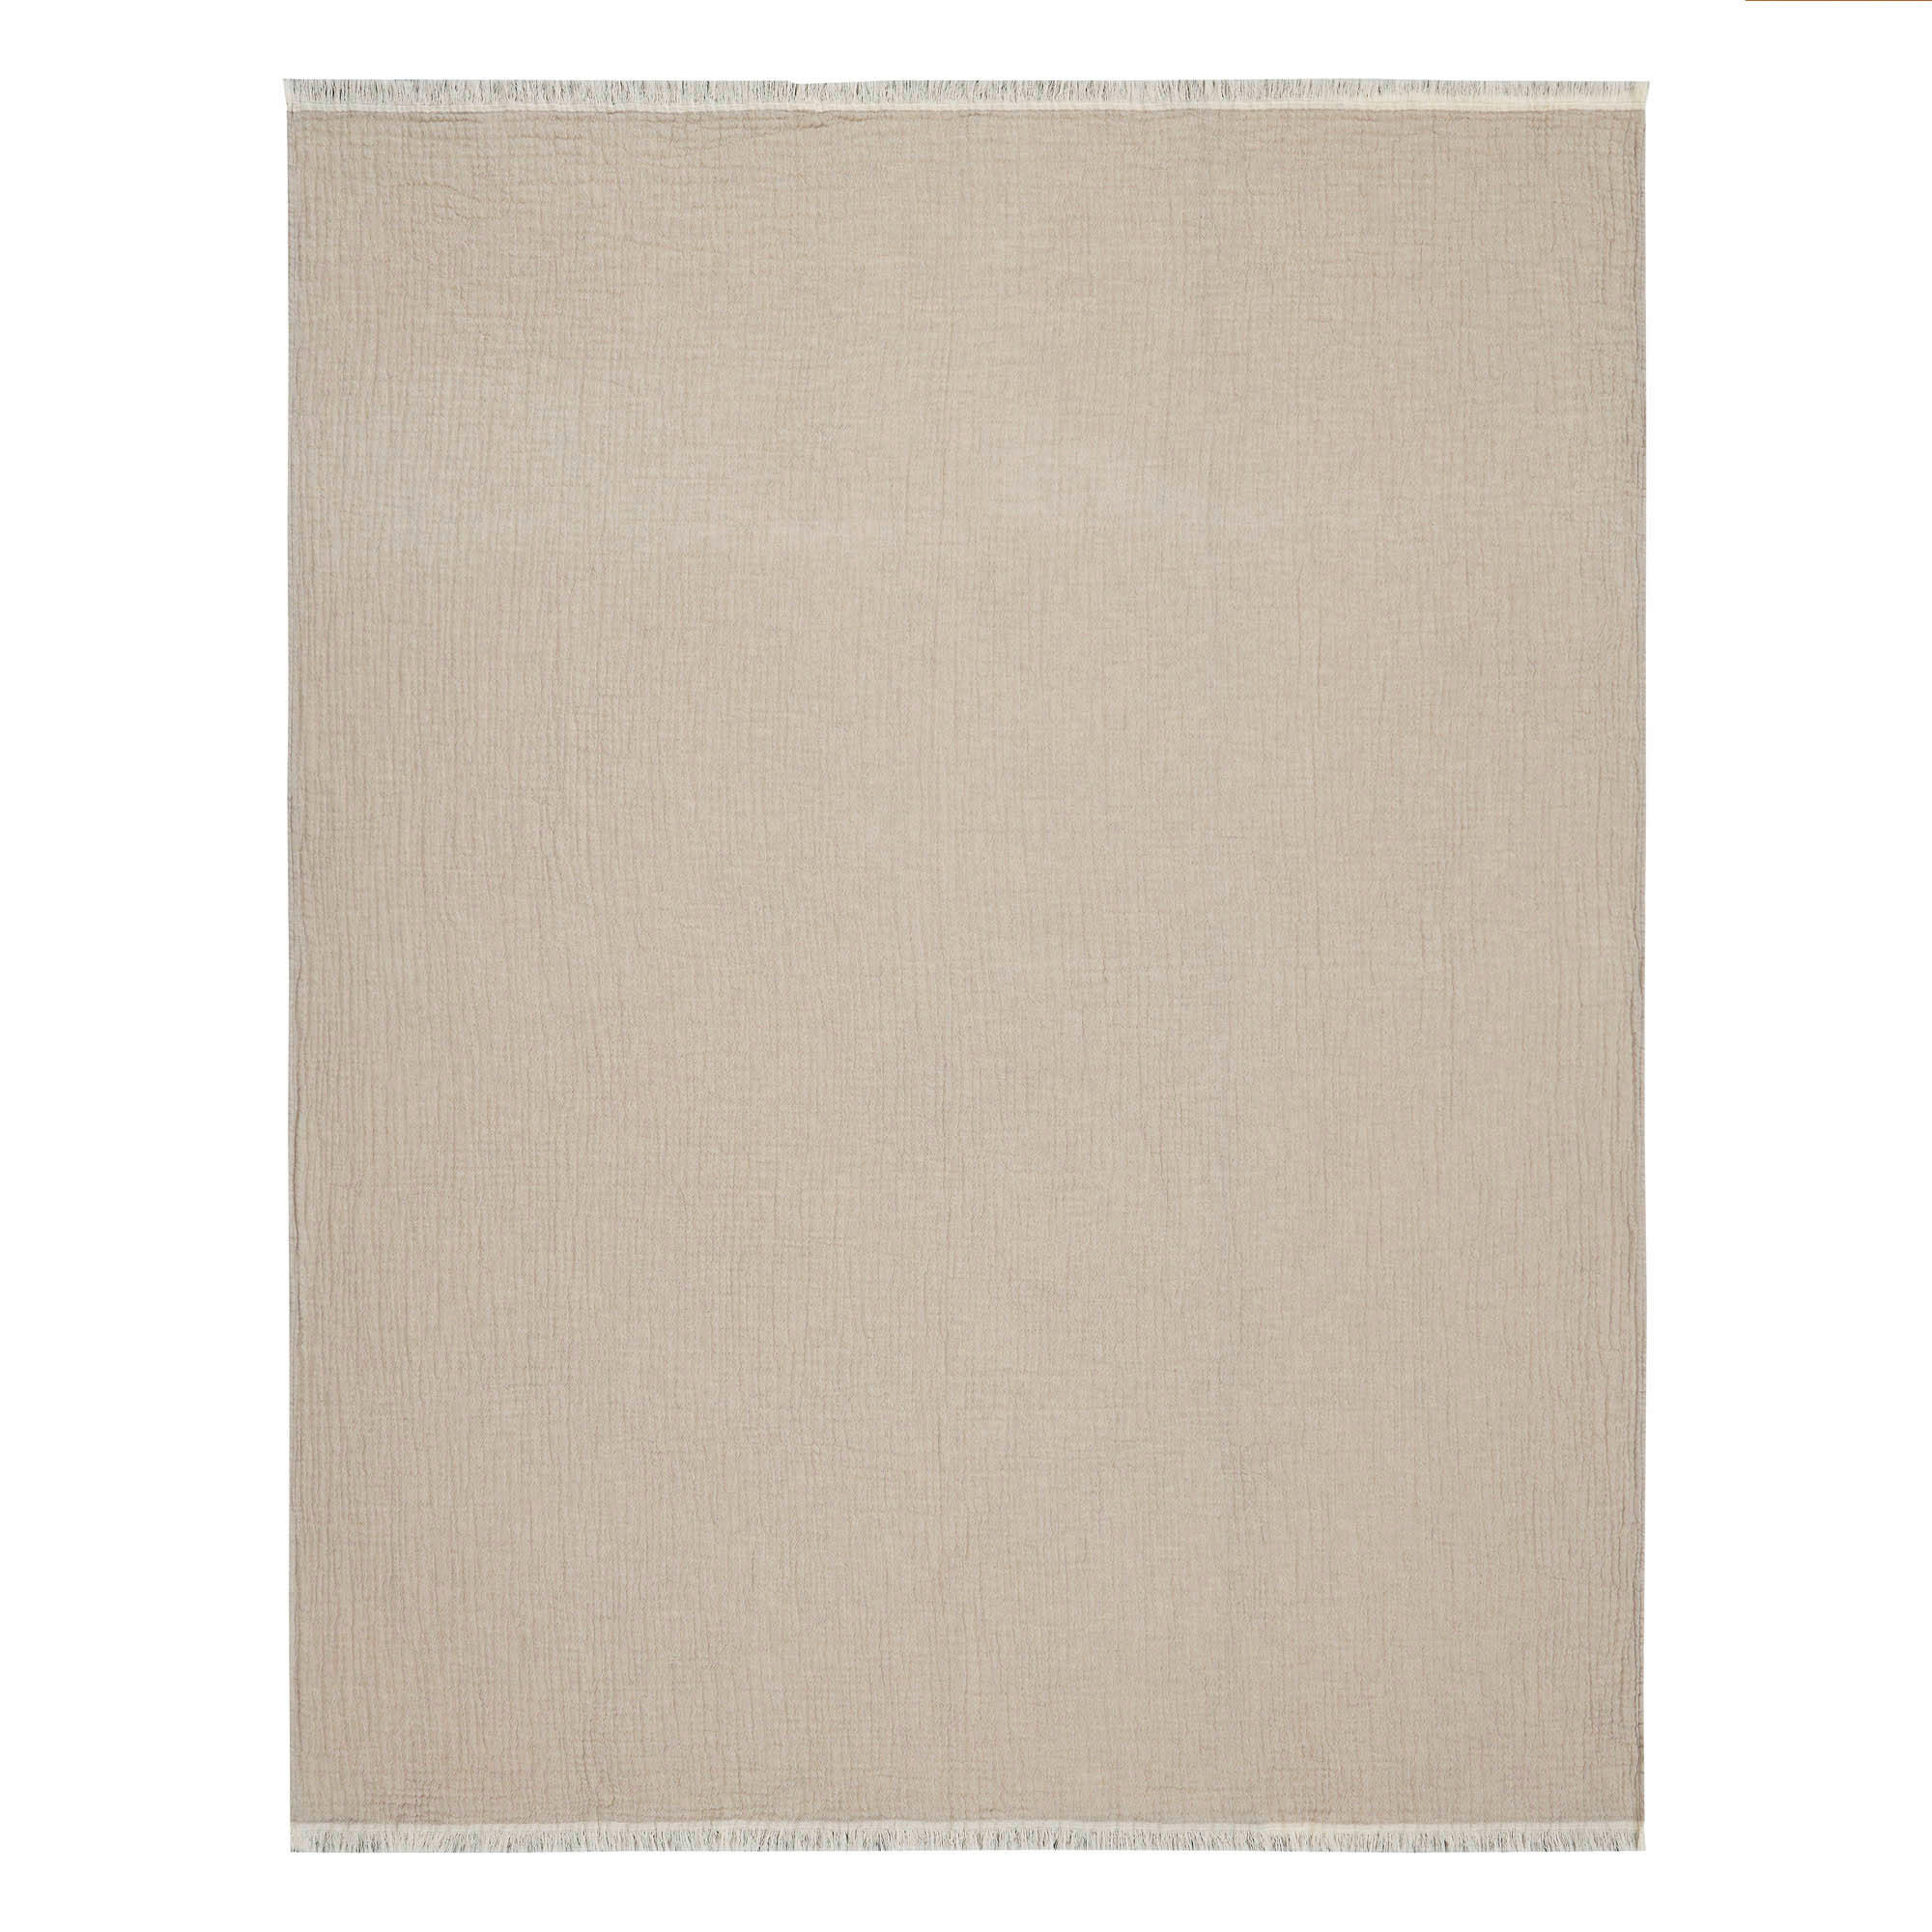 PLAID Baggy 125/170 cm  - Beige, Basics, Textil (125/170cm) - Bassetti